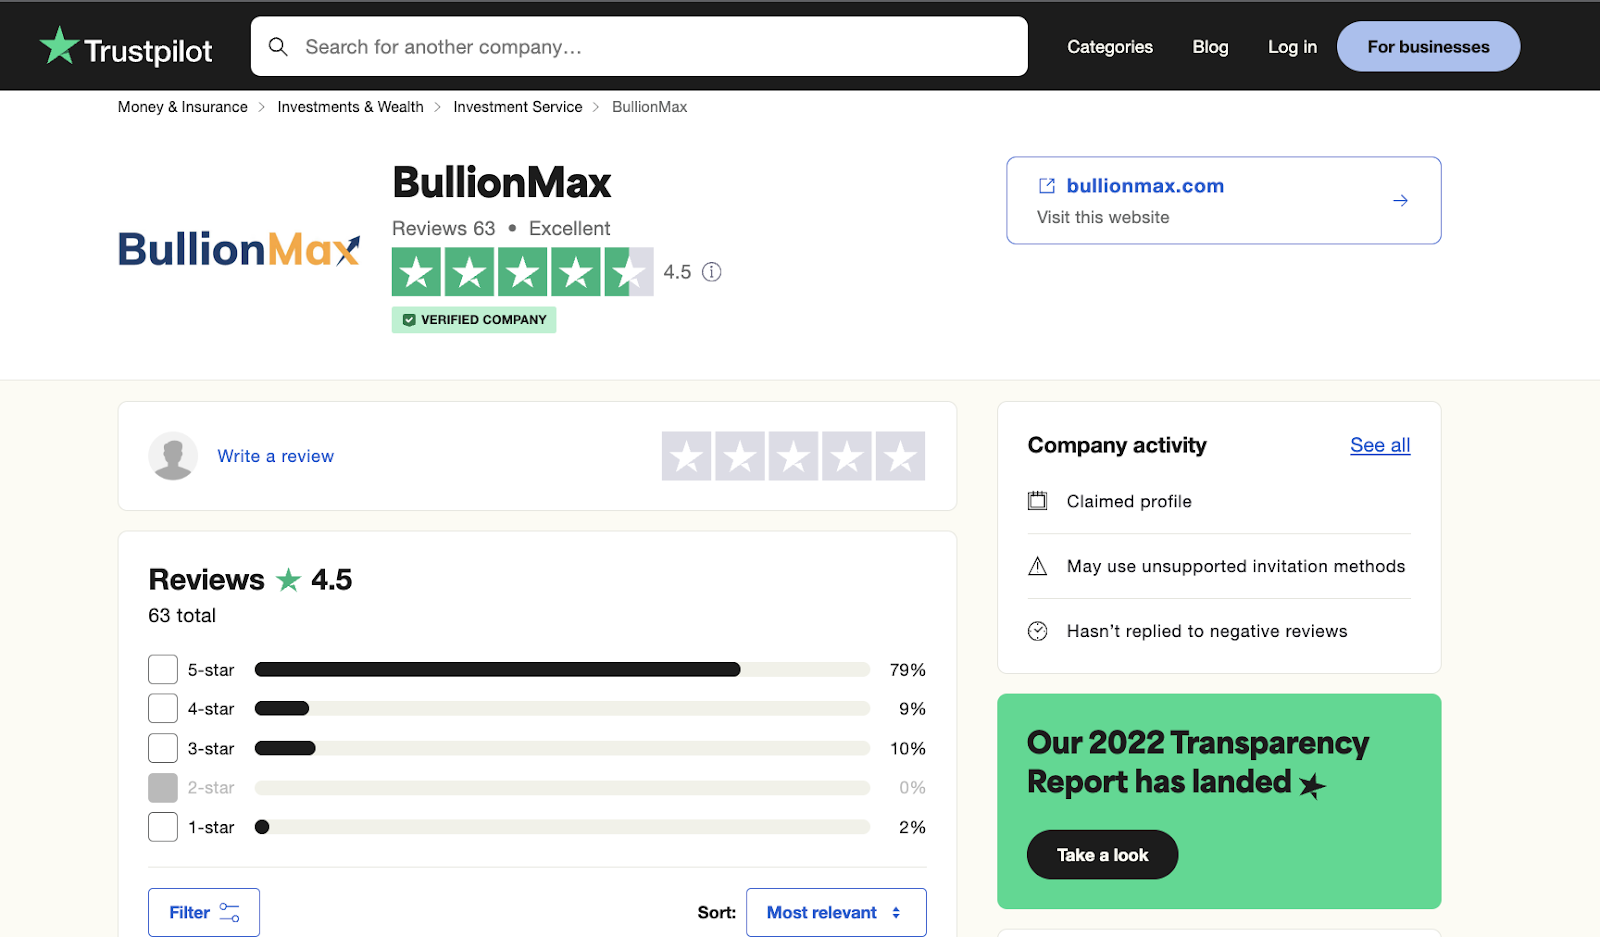 BullionMax reviews on Trustpilot